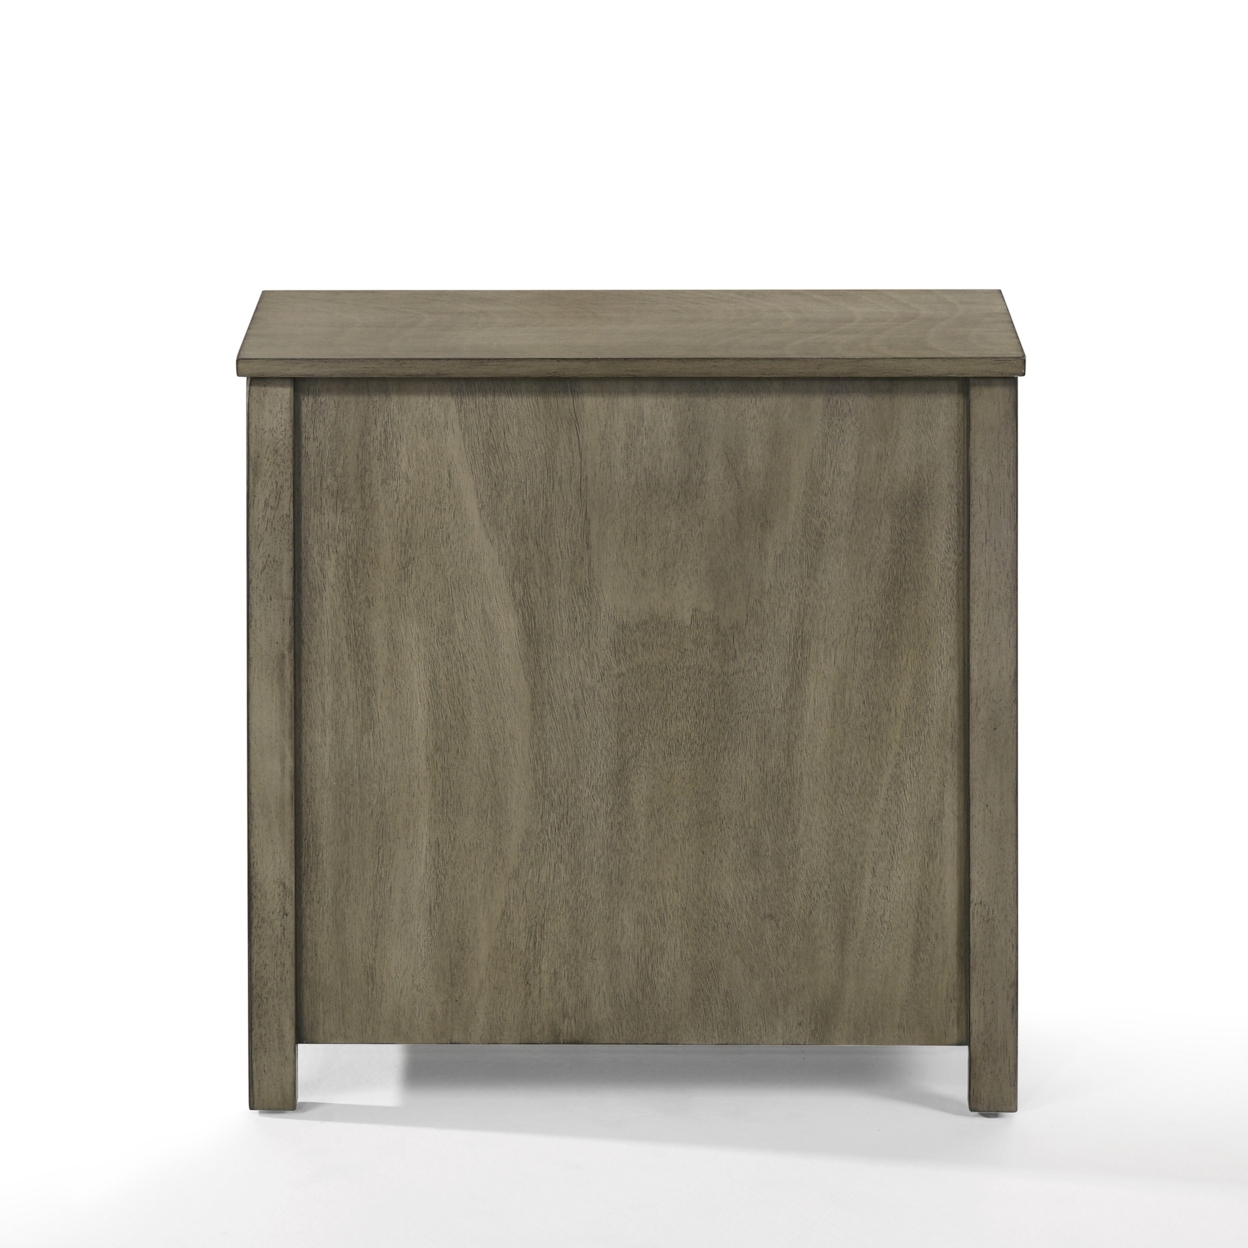 Dane 24 Inch Side End Table, Shutter Style Door Cabinet, Warm Gray Finish- Saltoro Sherpi